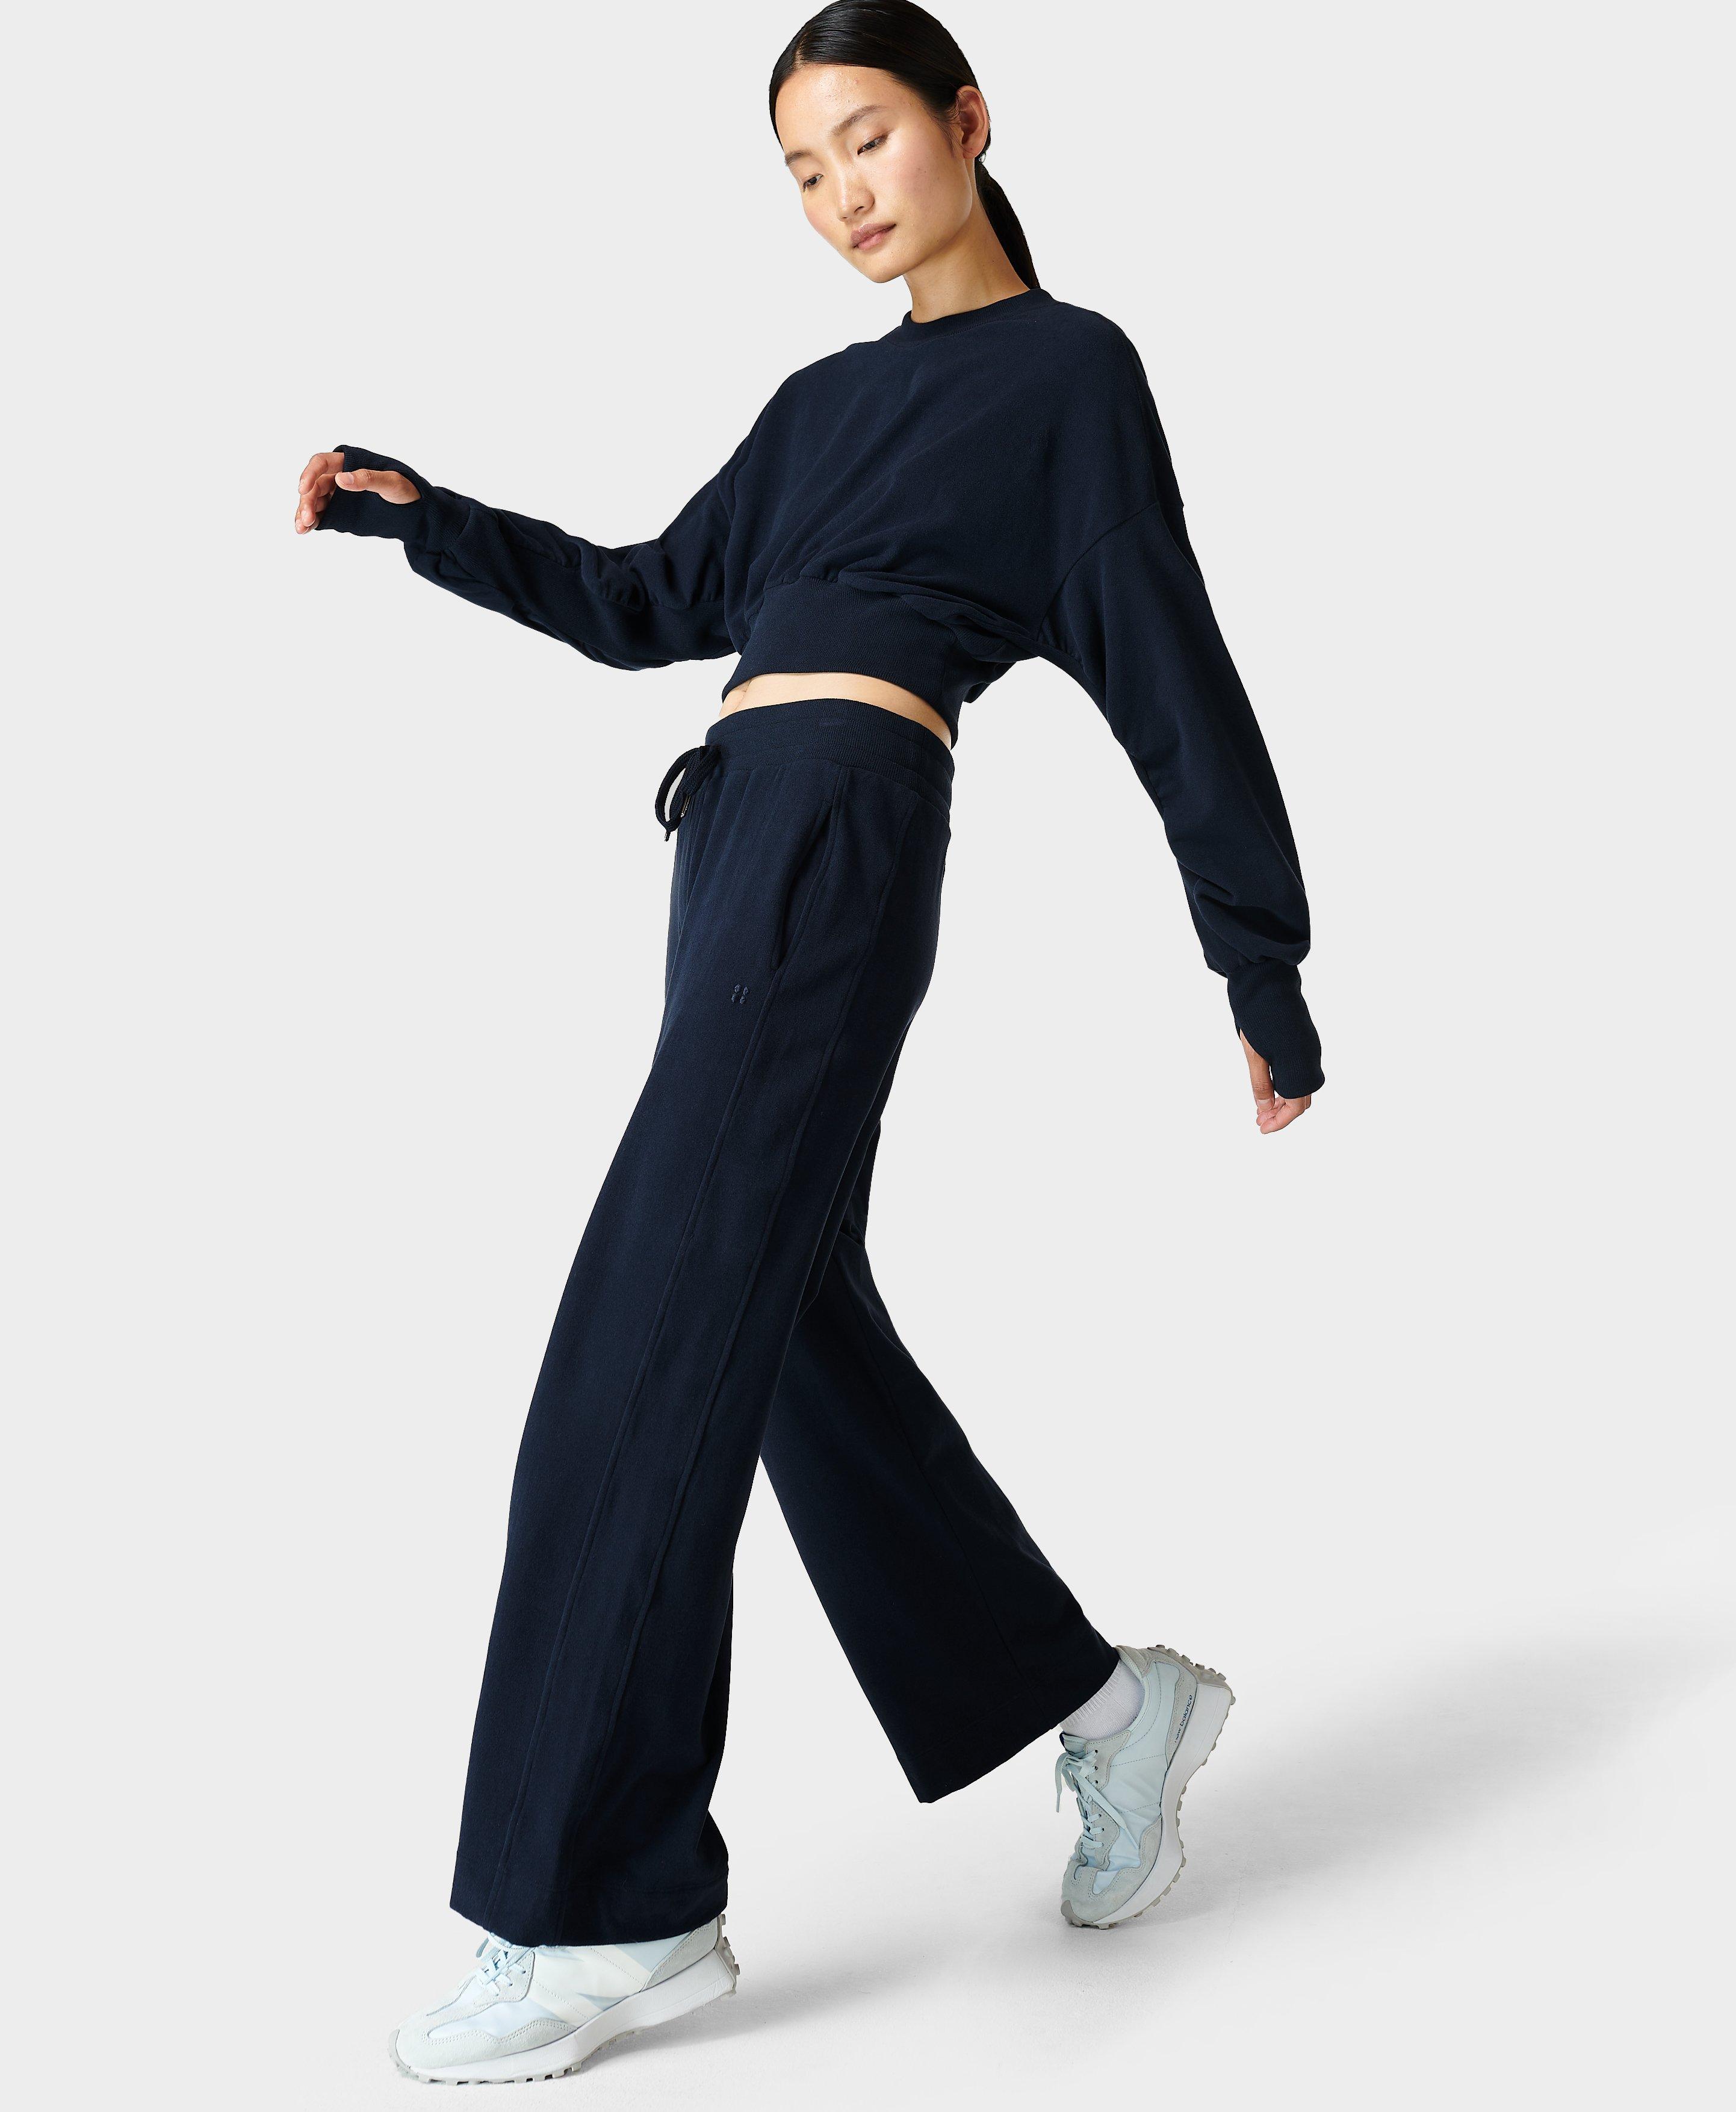 SARA Premium Women Track pants, navy lycra pant, fullpant for women